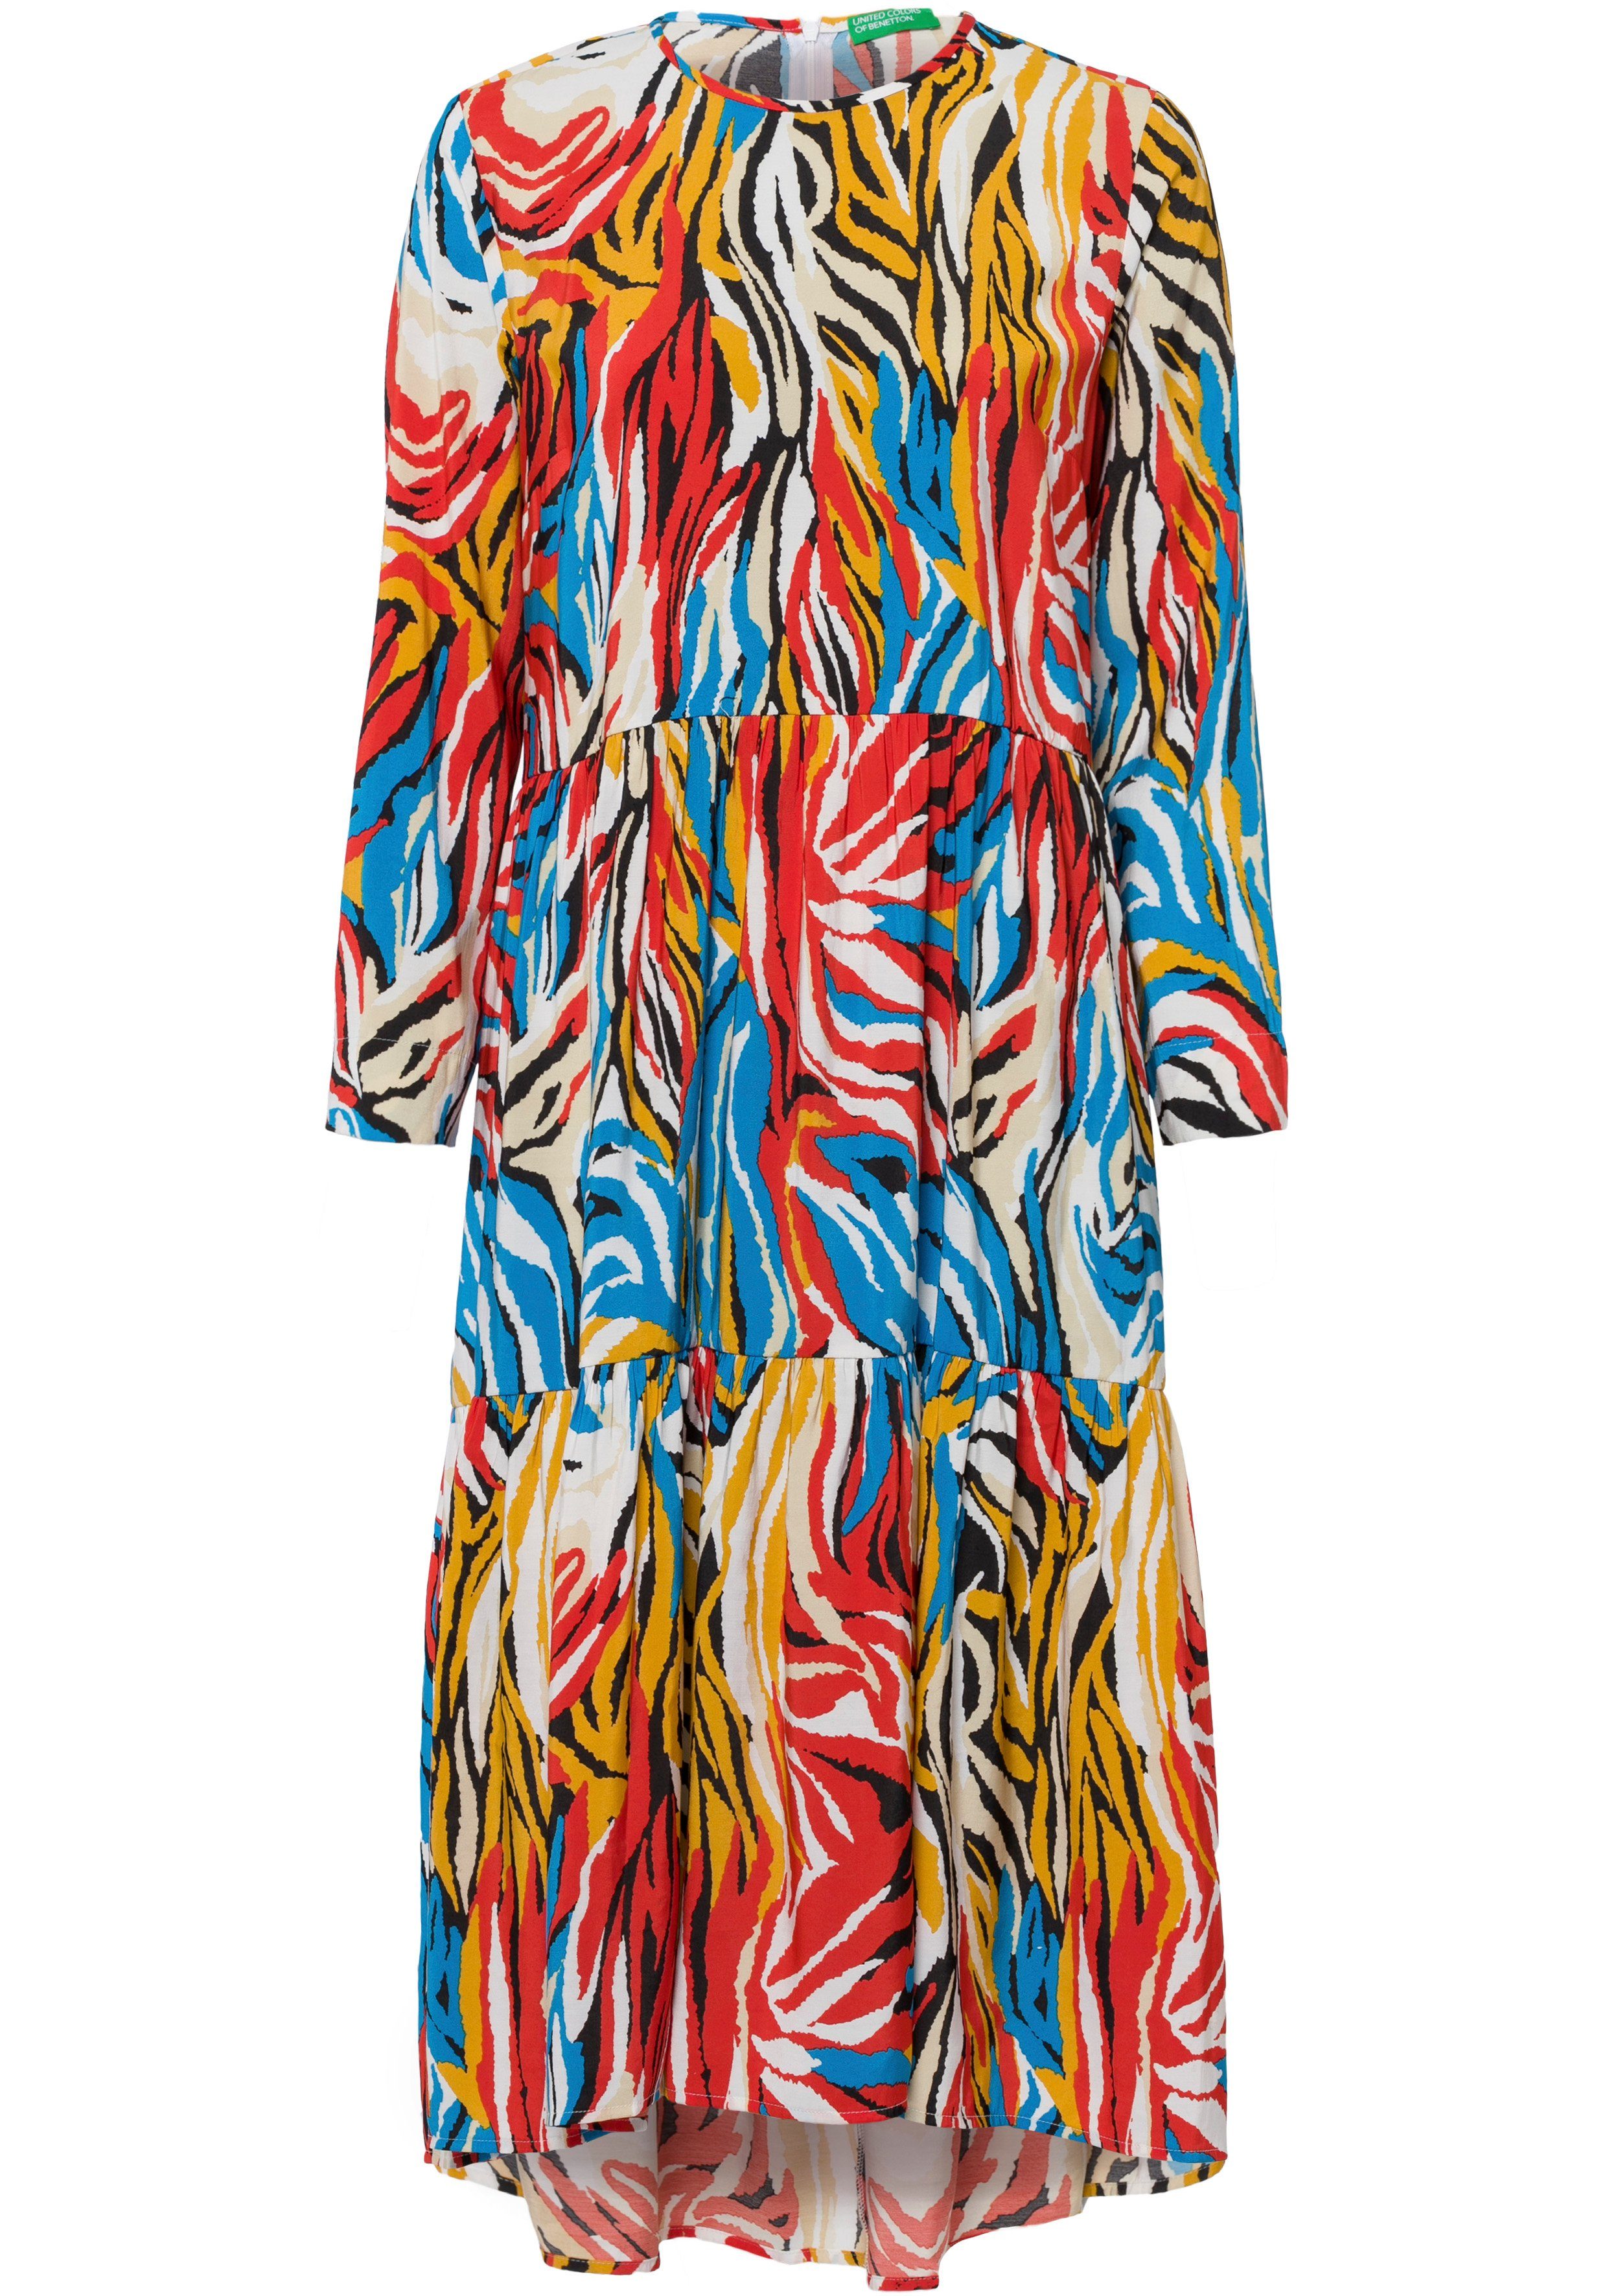 United Colors of Benetton Kleid online kaufen | OTTO